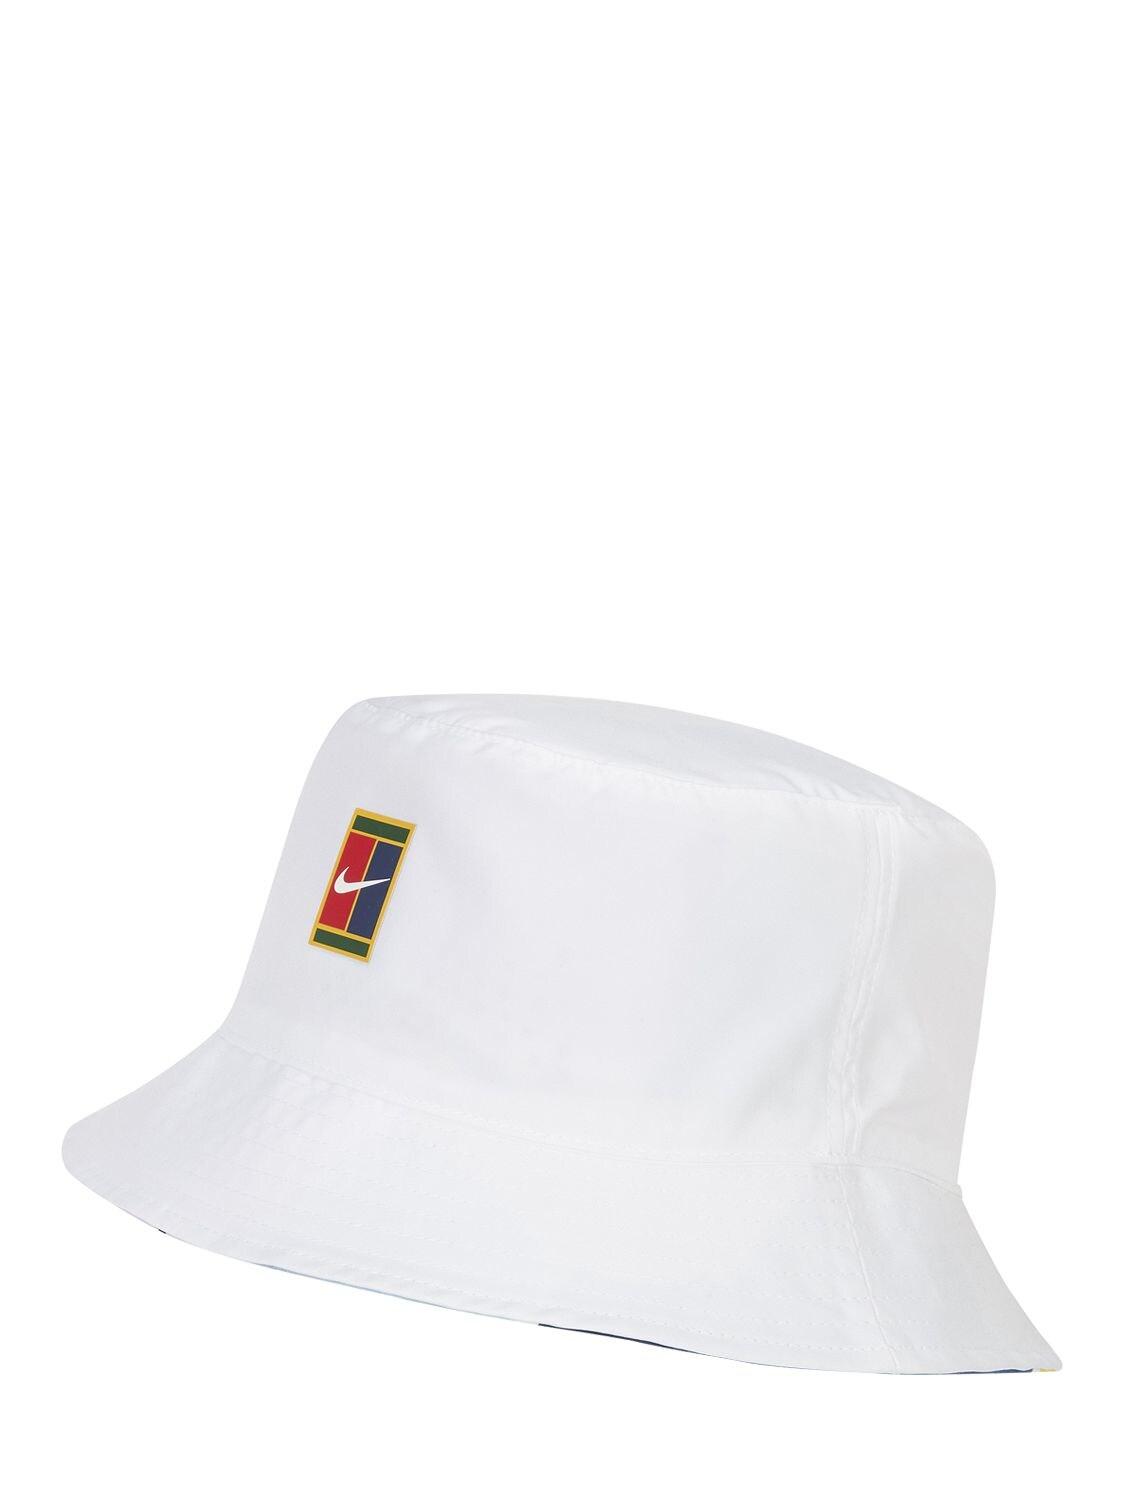 Nike Court Printed Tennis Bucket Hat in White - Lyst